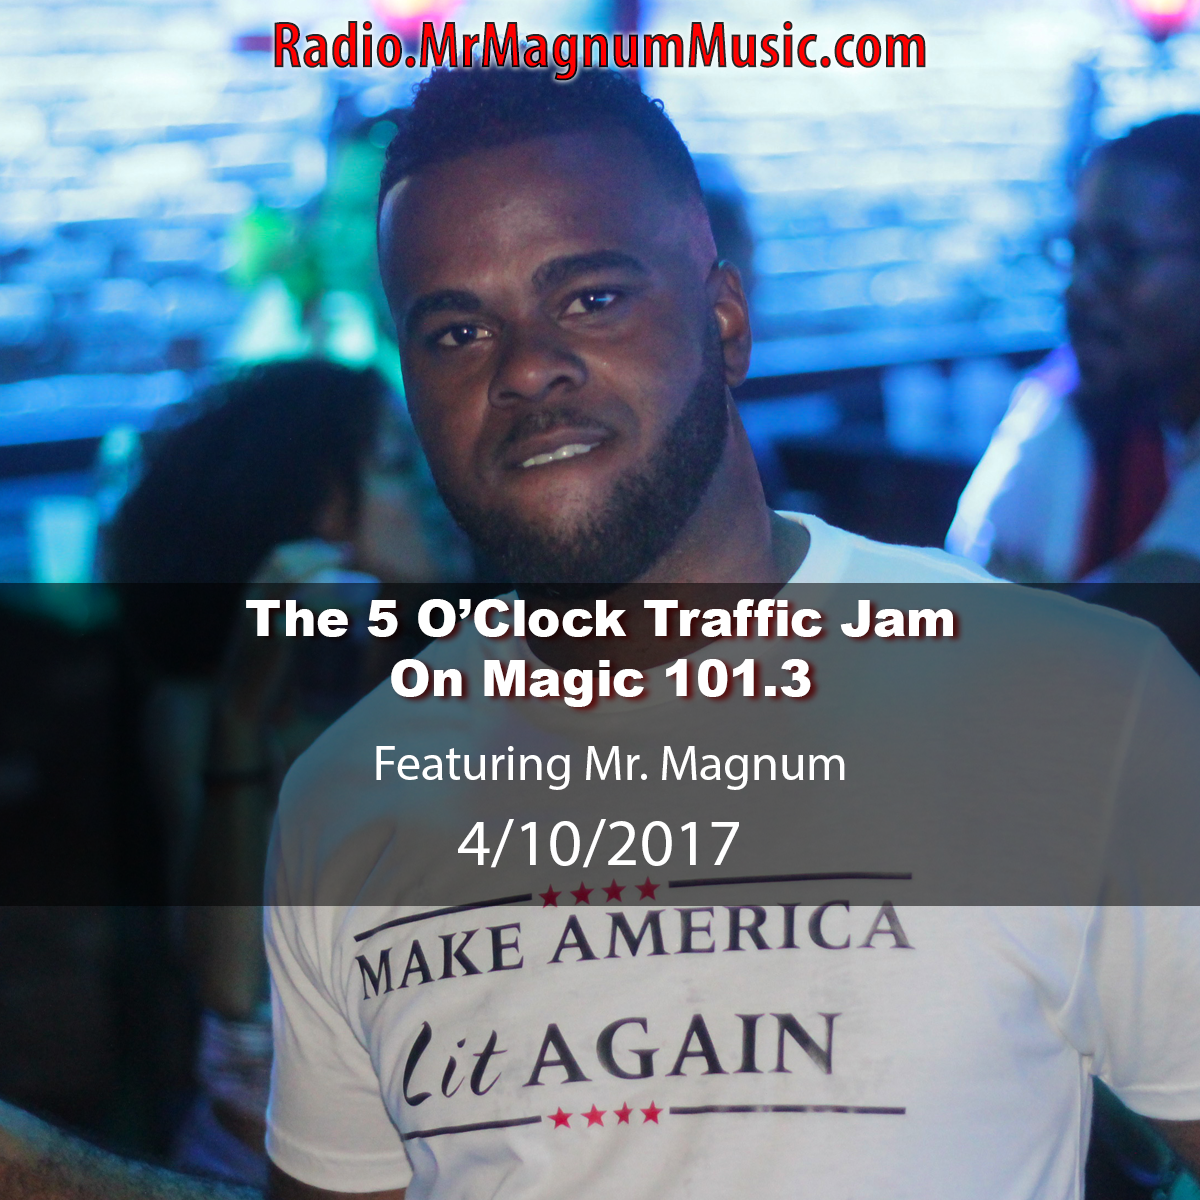 The 5 O'Clock Traffic Jam 20170410 featuring Gainesville's #1 DJ, Mr. Magnum on Magic 101.3